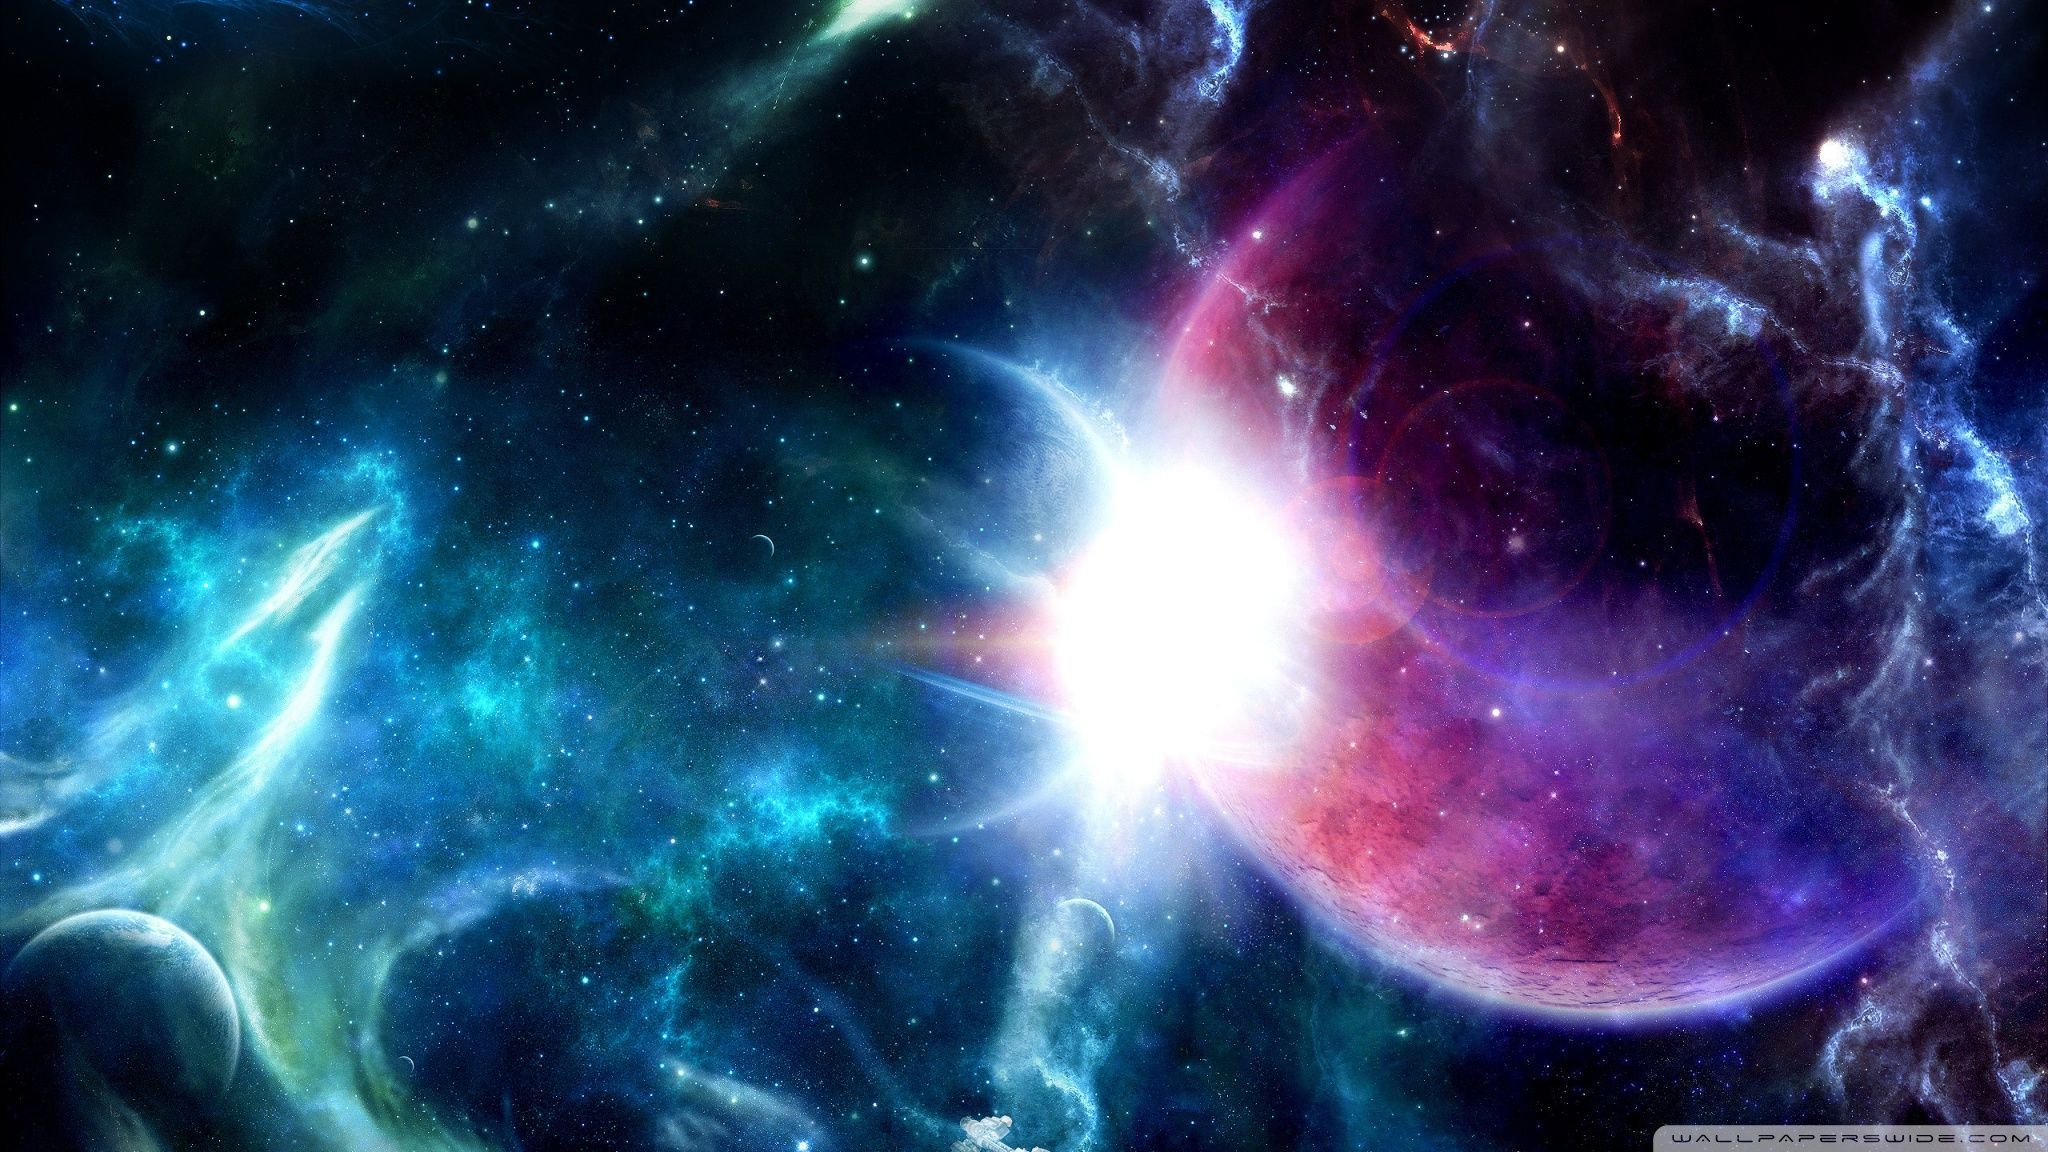 Nebula in space 1902x1902px #605513